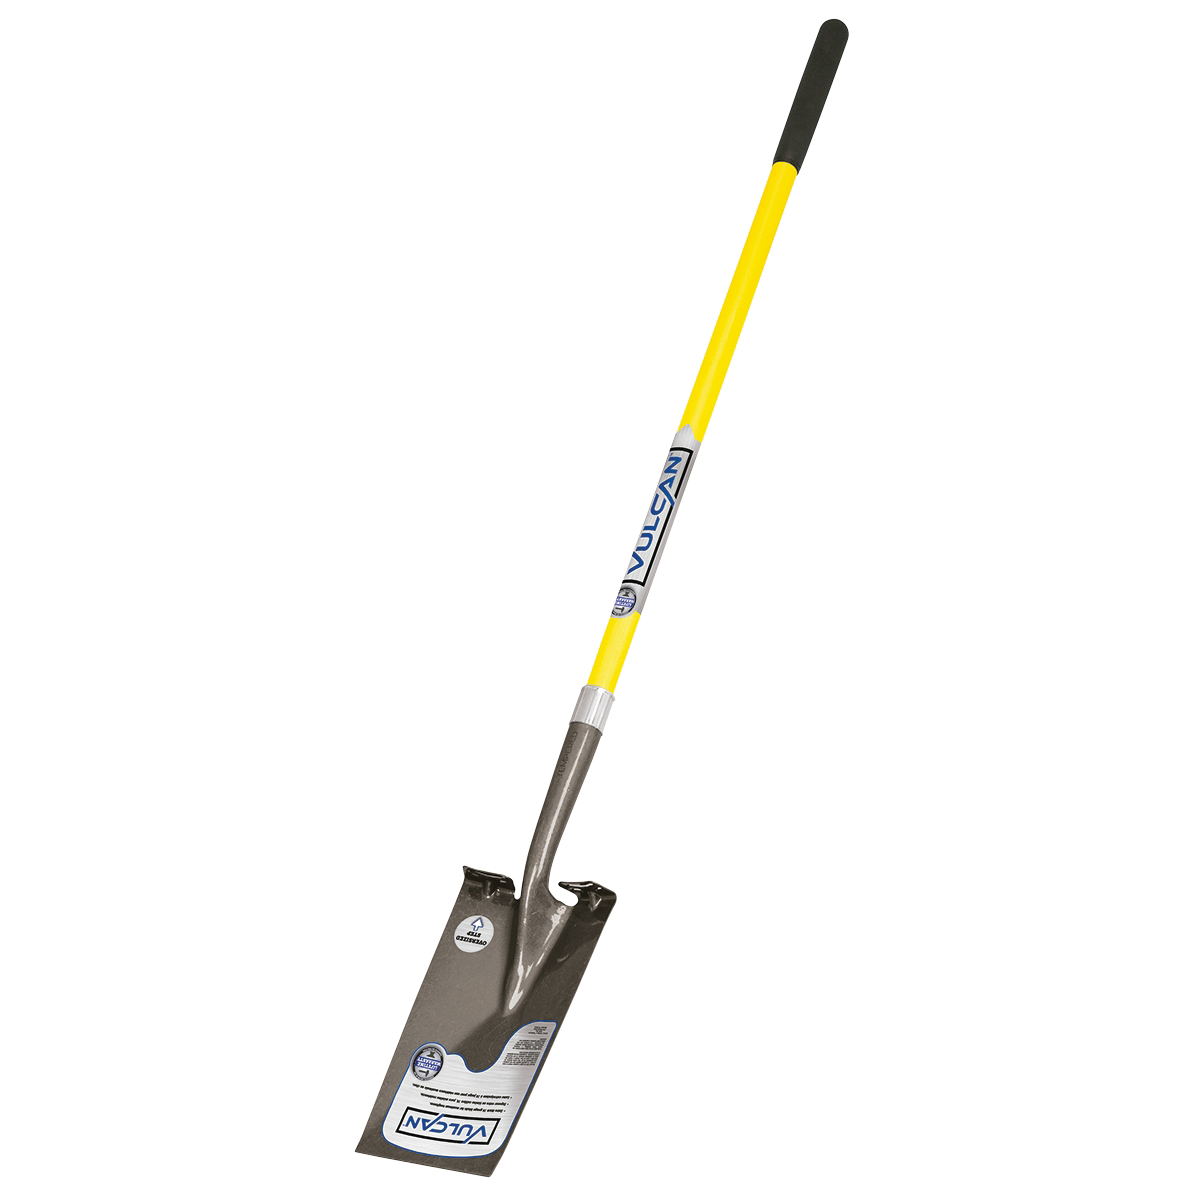 34539 Garden Spade Shovel, Fiberglass Handle, Long Handle, 48 in L Handle